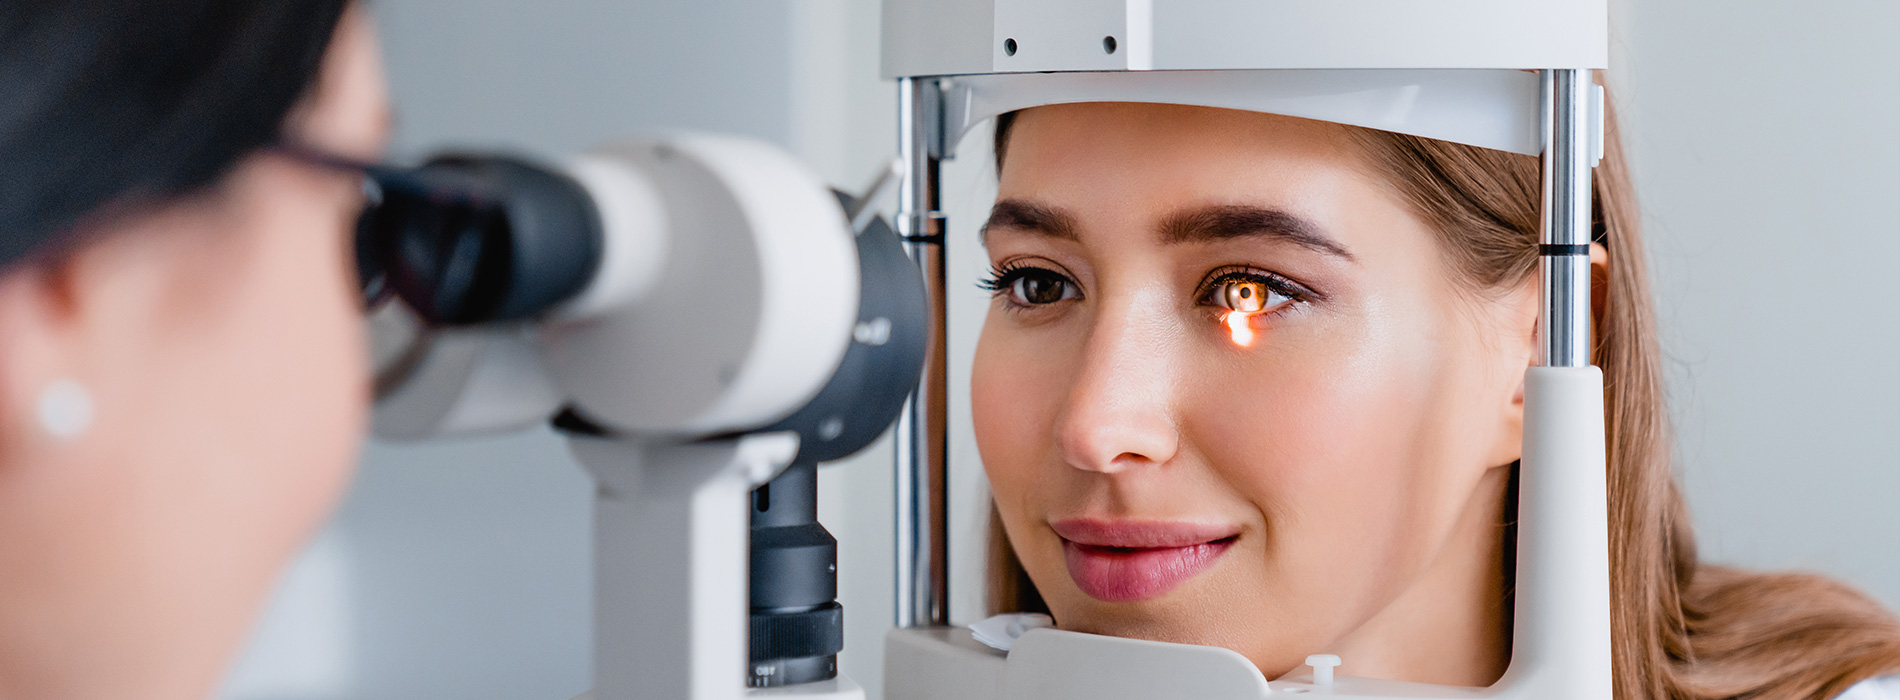 Eye Doctor Las Vegas, Ophthalmologists NV